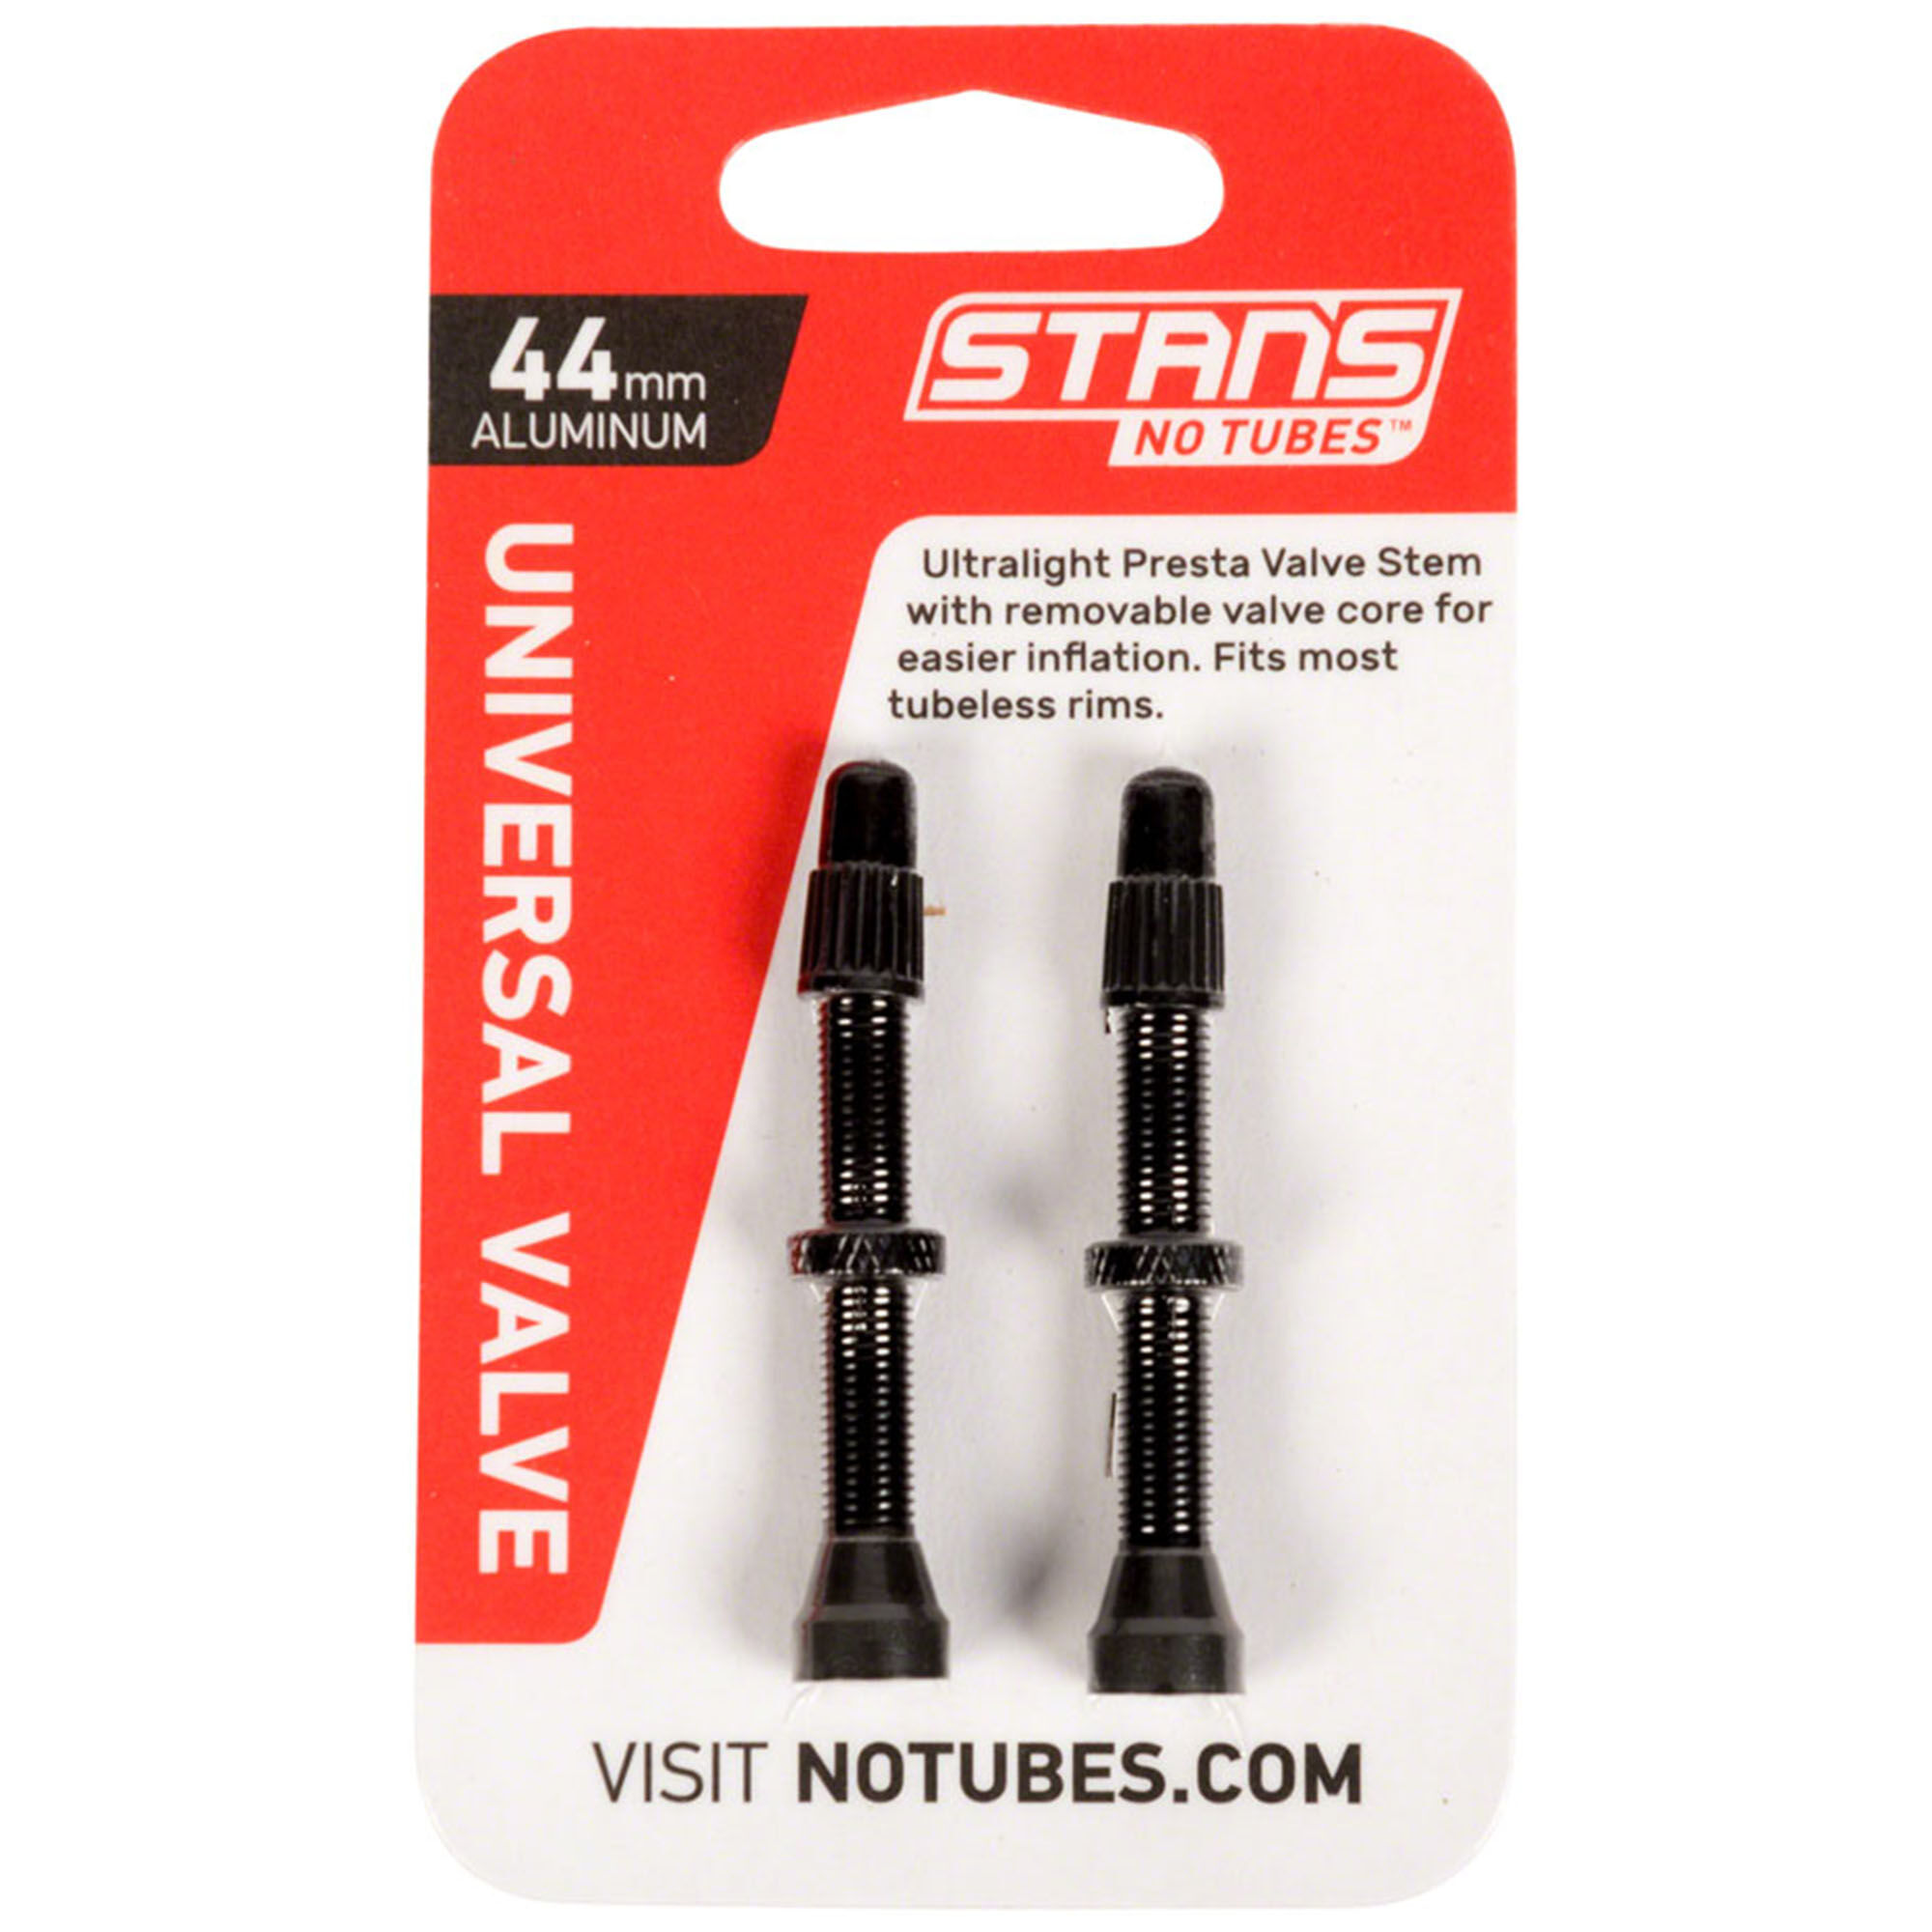 Stan's No Tubes Alloy 44 mm Valve Stems  - Black - Size: No Size